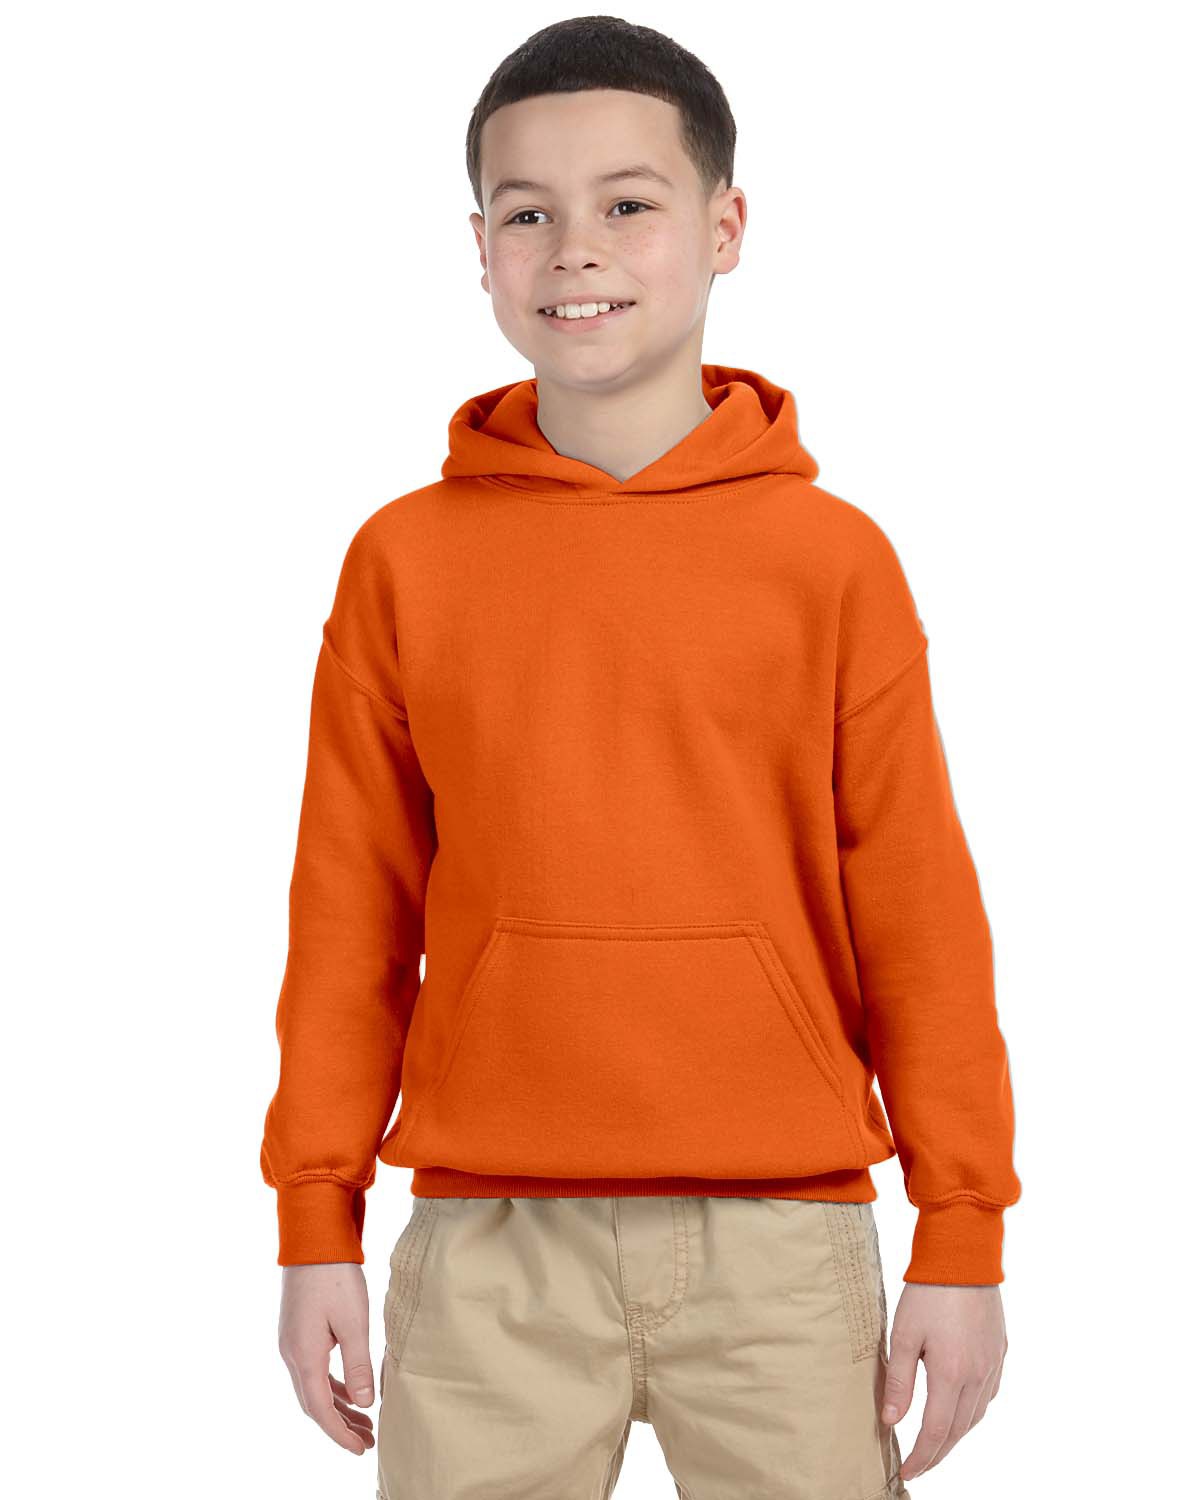 12 Gildan Heavy Blend Hooded Sweatshirt BULK Hoodie Lot ok to mix S-XL &  Colors 